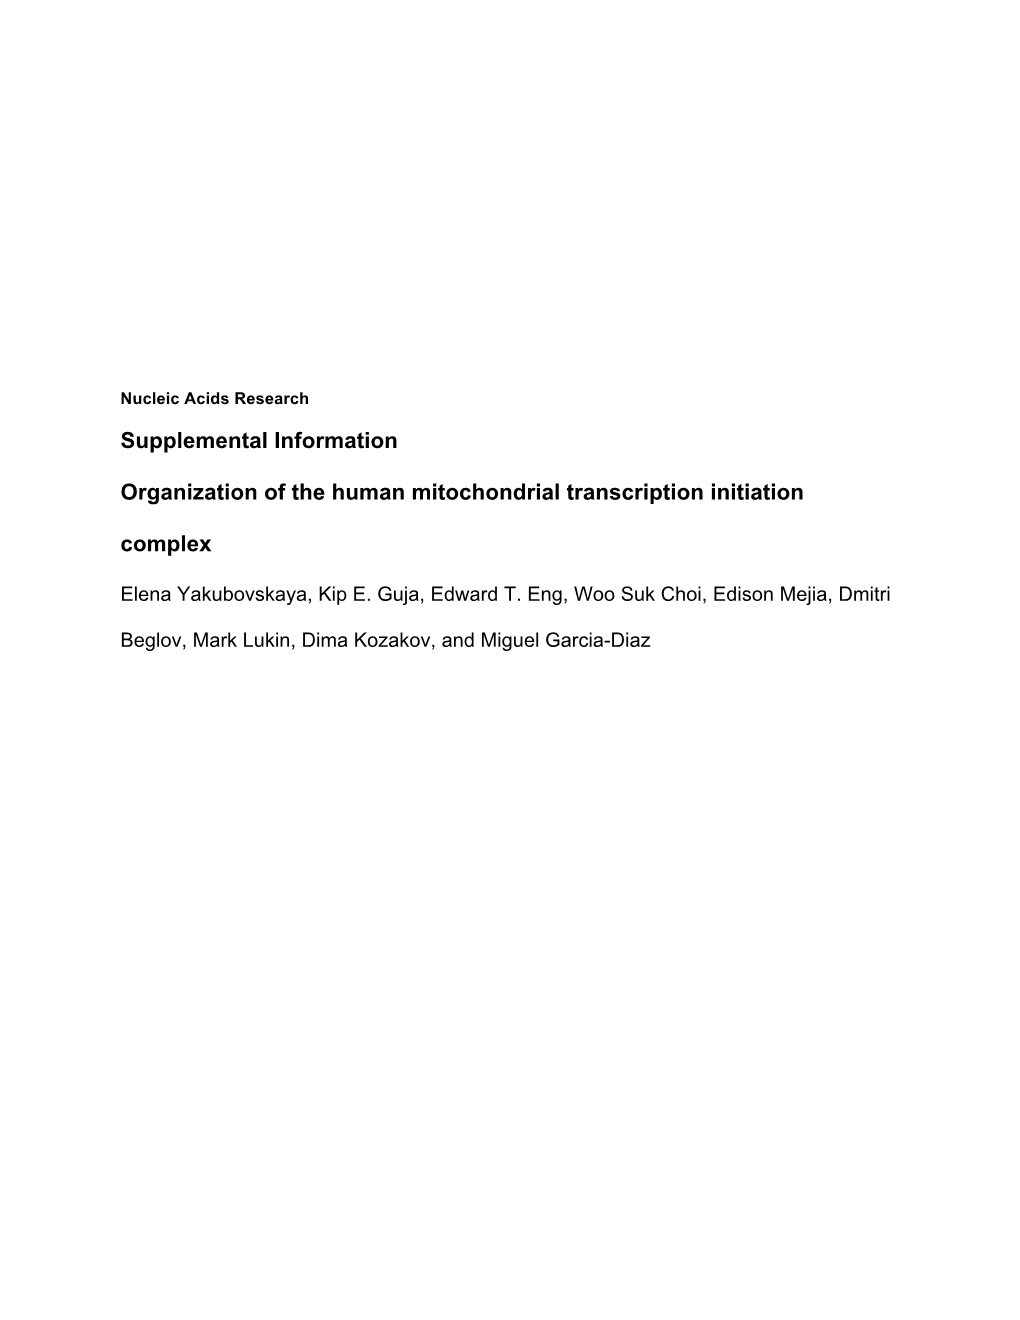 Supplemental Information Organization of the Human